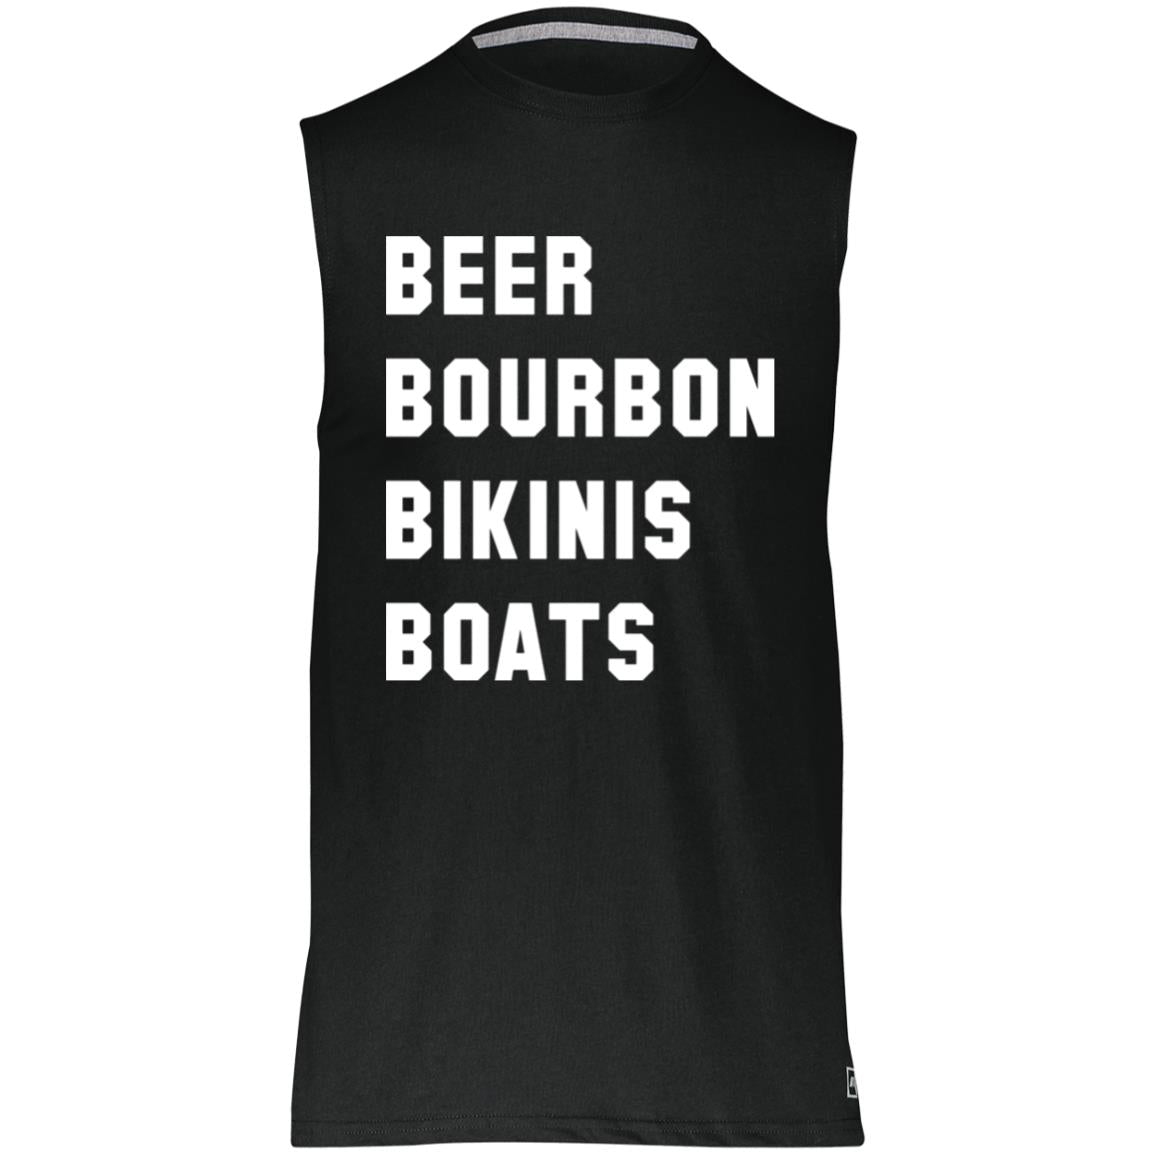 HRCL FL - Beer Bourbon Bikinis Boats - 2 Sided 64MTTM Essential Dri-Power Sleeveless Muscle Tee